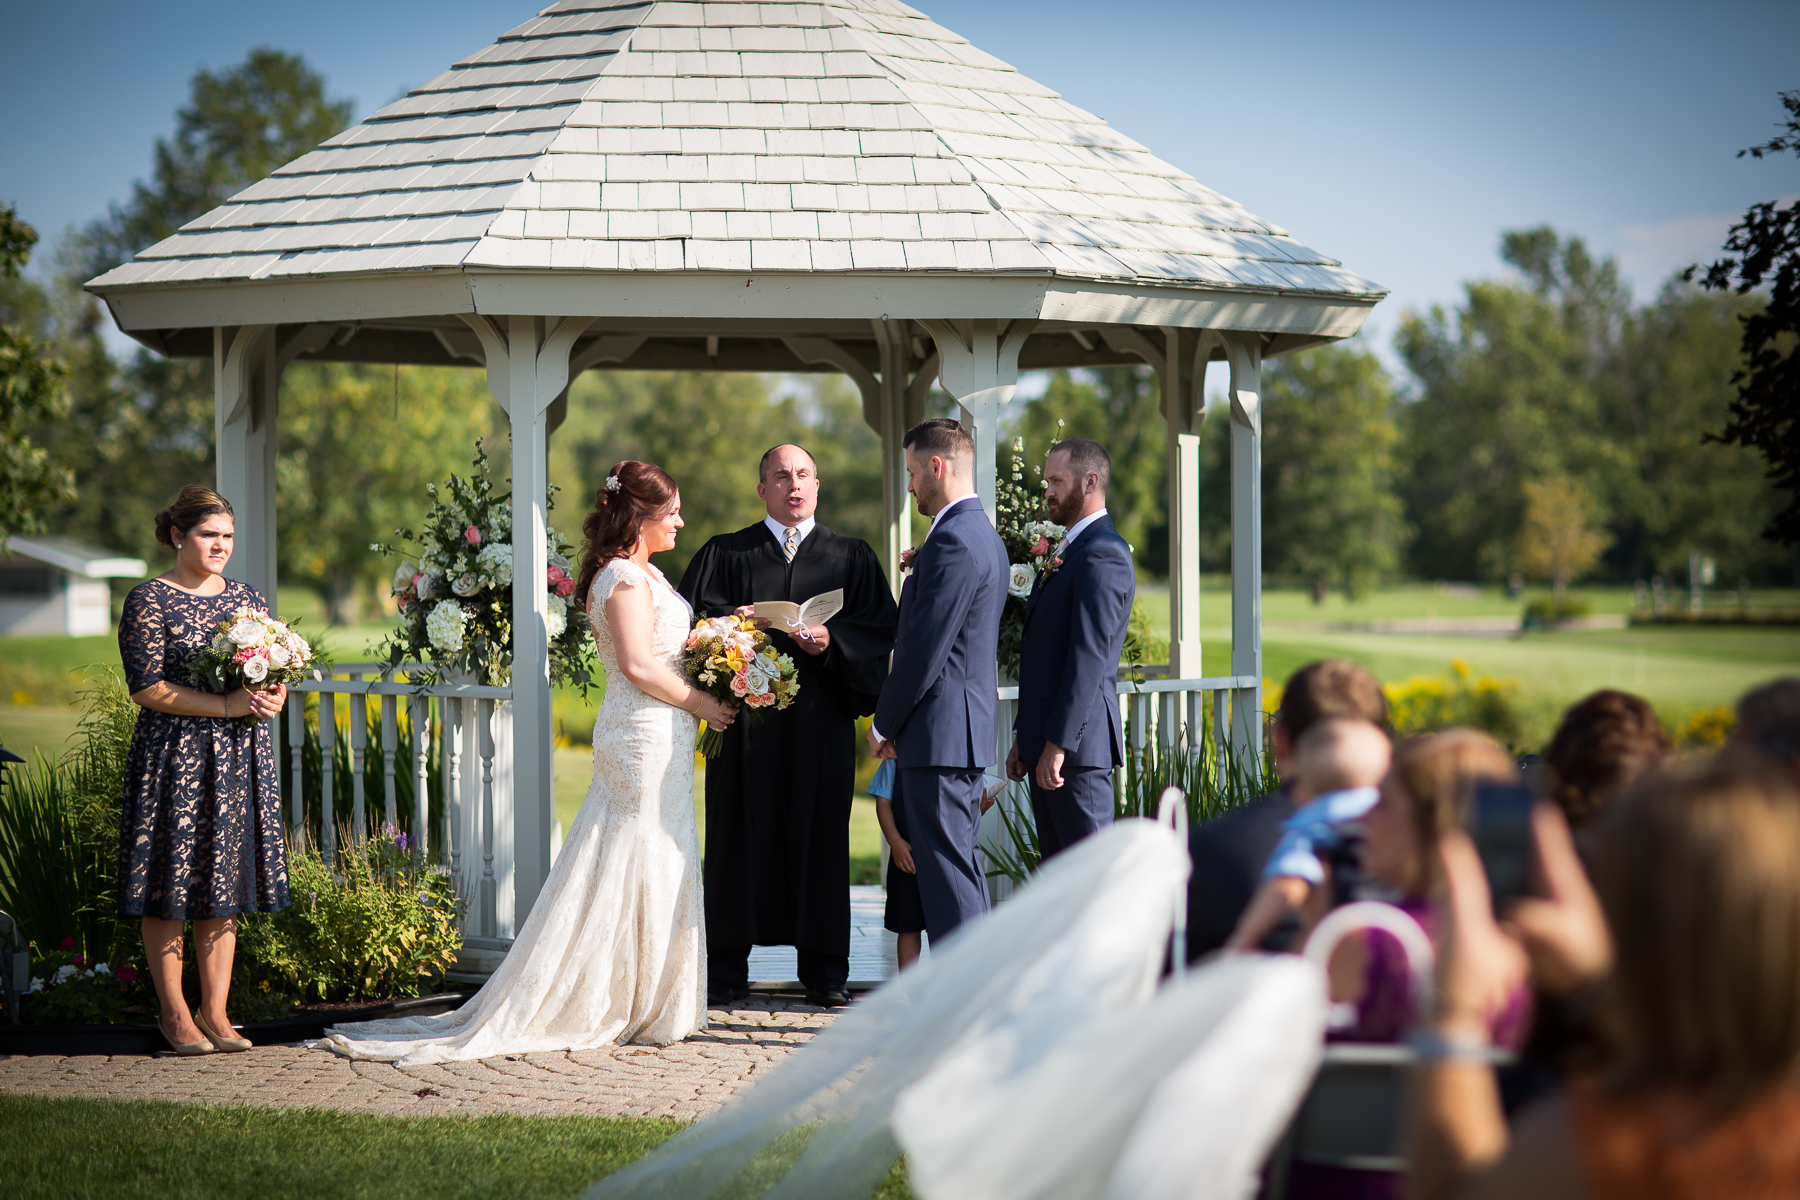 Wedding photos taken at Glen Oak in Amherst, NY by wedding photographer Jessica Ahrens.